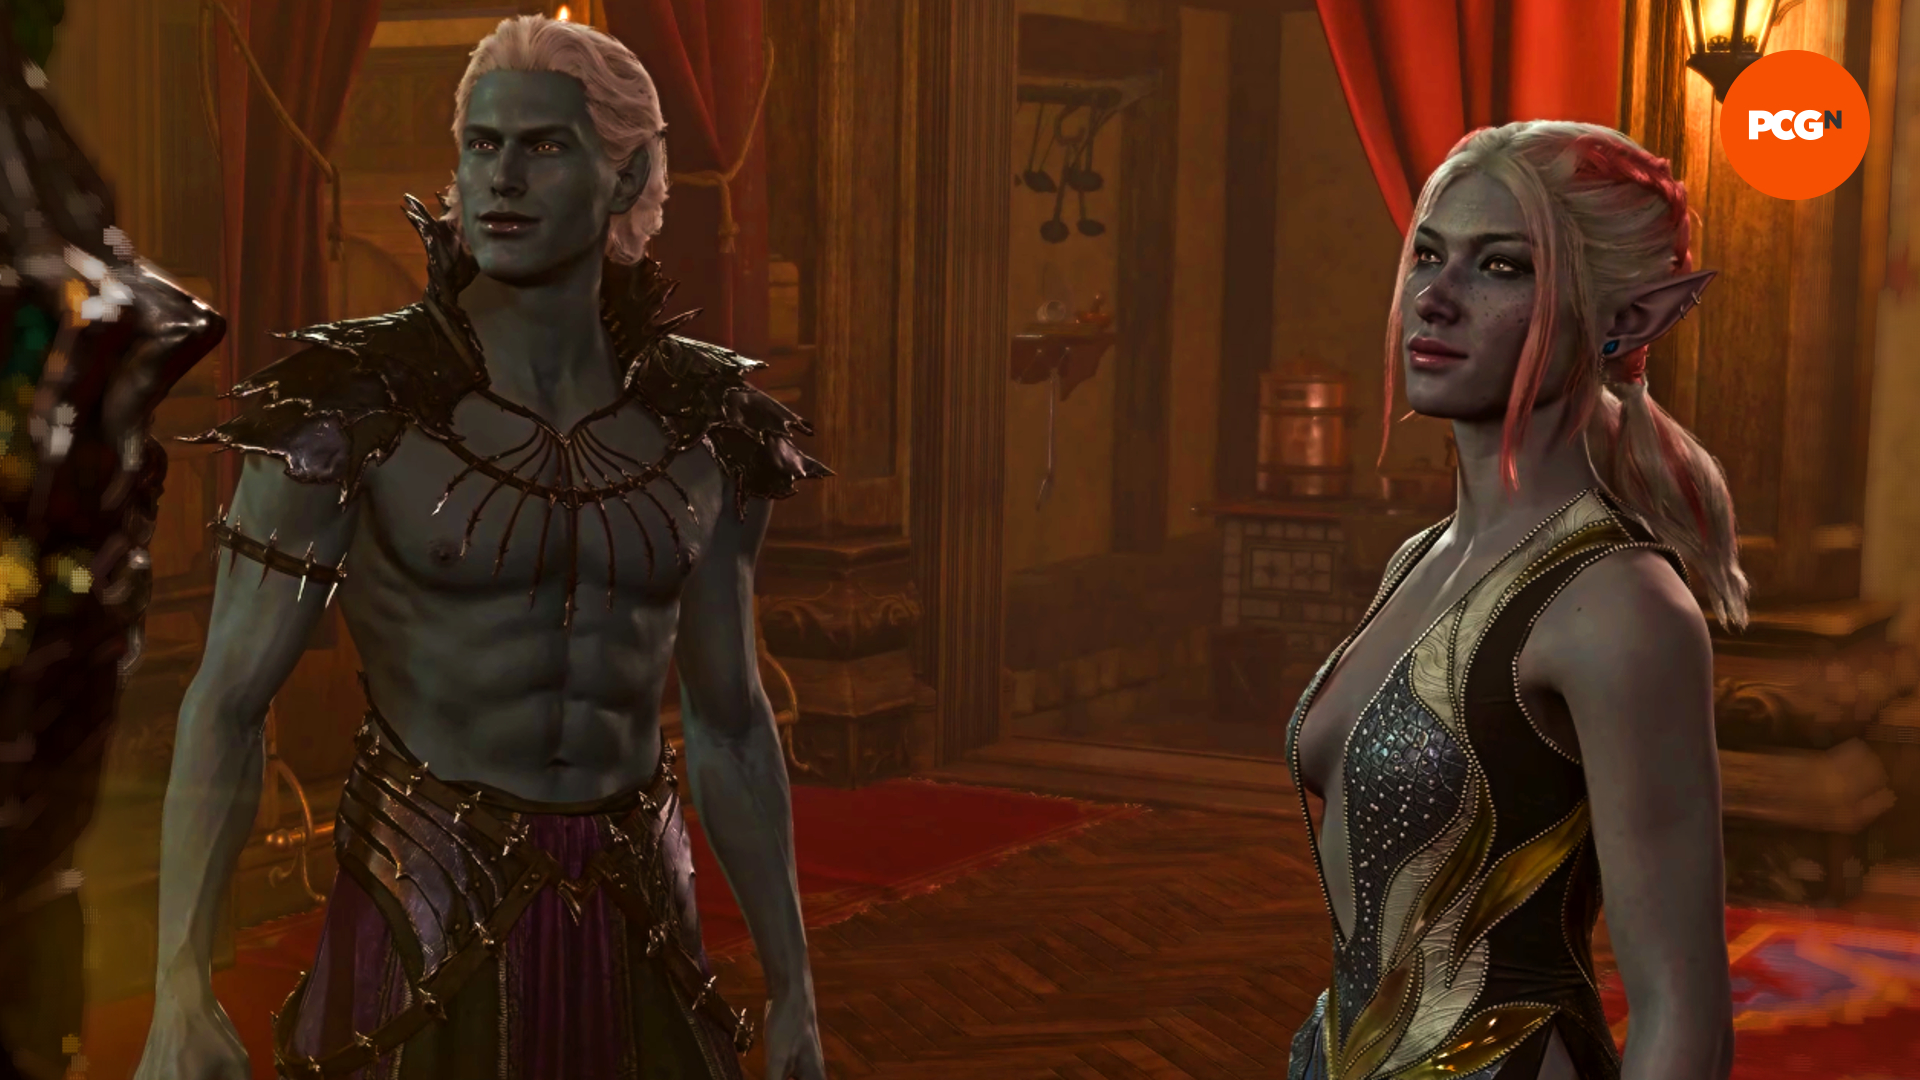 Baldur's Gate 3 Drow twins screenshot showcasing the moment you meet them at the brothel